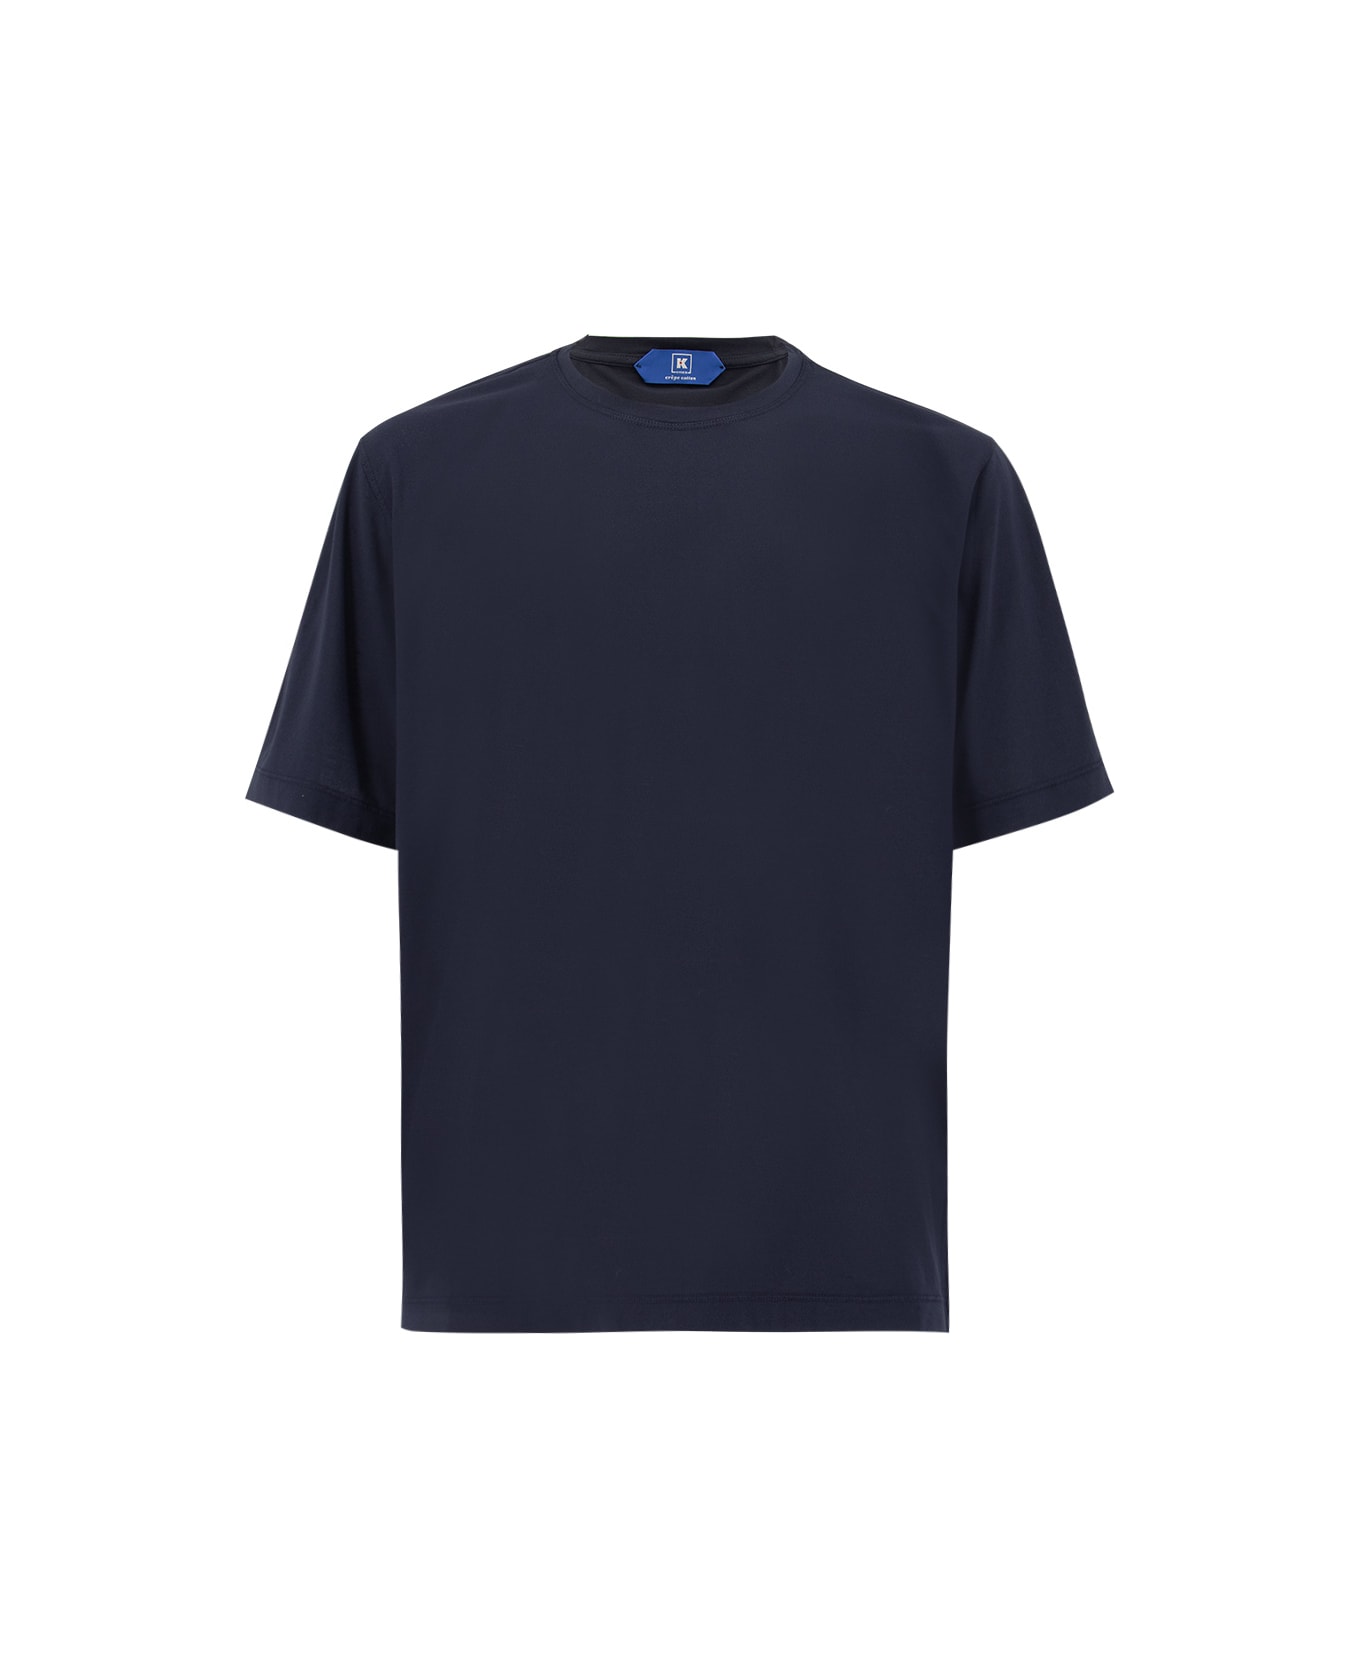 Kired T-shirt - NAVY BLUE